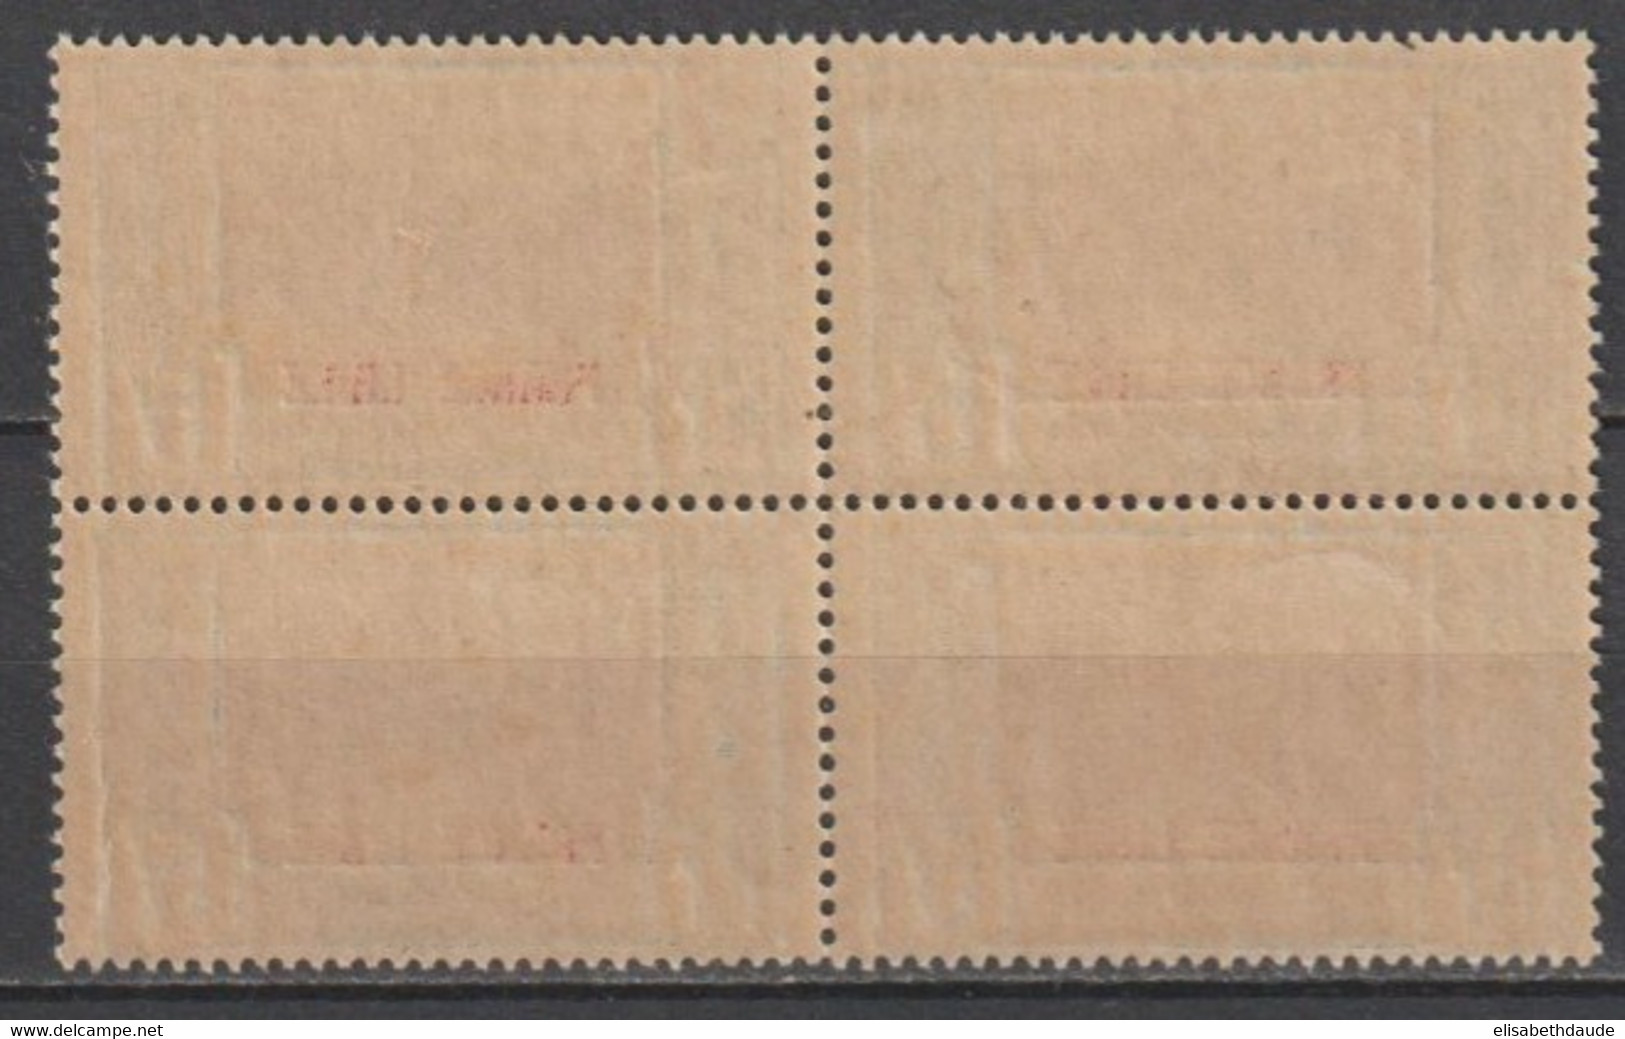 OCEANIE - 1941 - YVERT N°141 ** MNH BLOC De 4 FRANCE LIBRE ! - COTE = 64 EUR - Unused Stamps